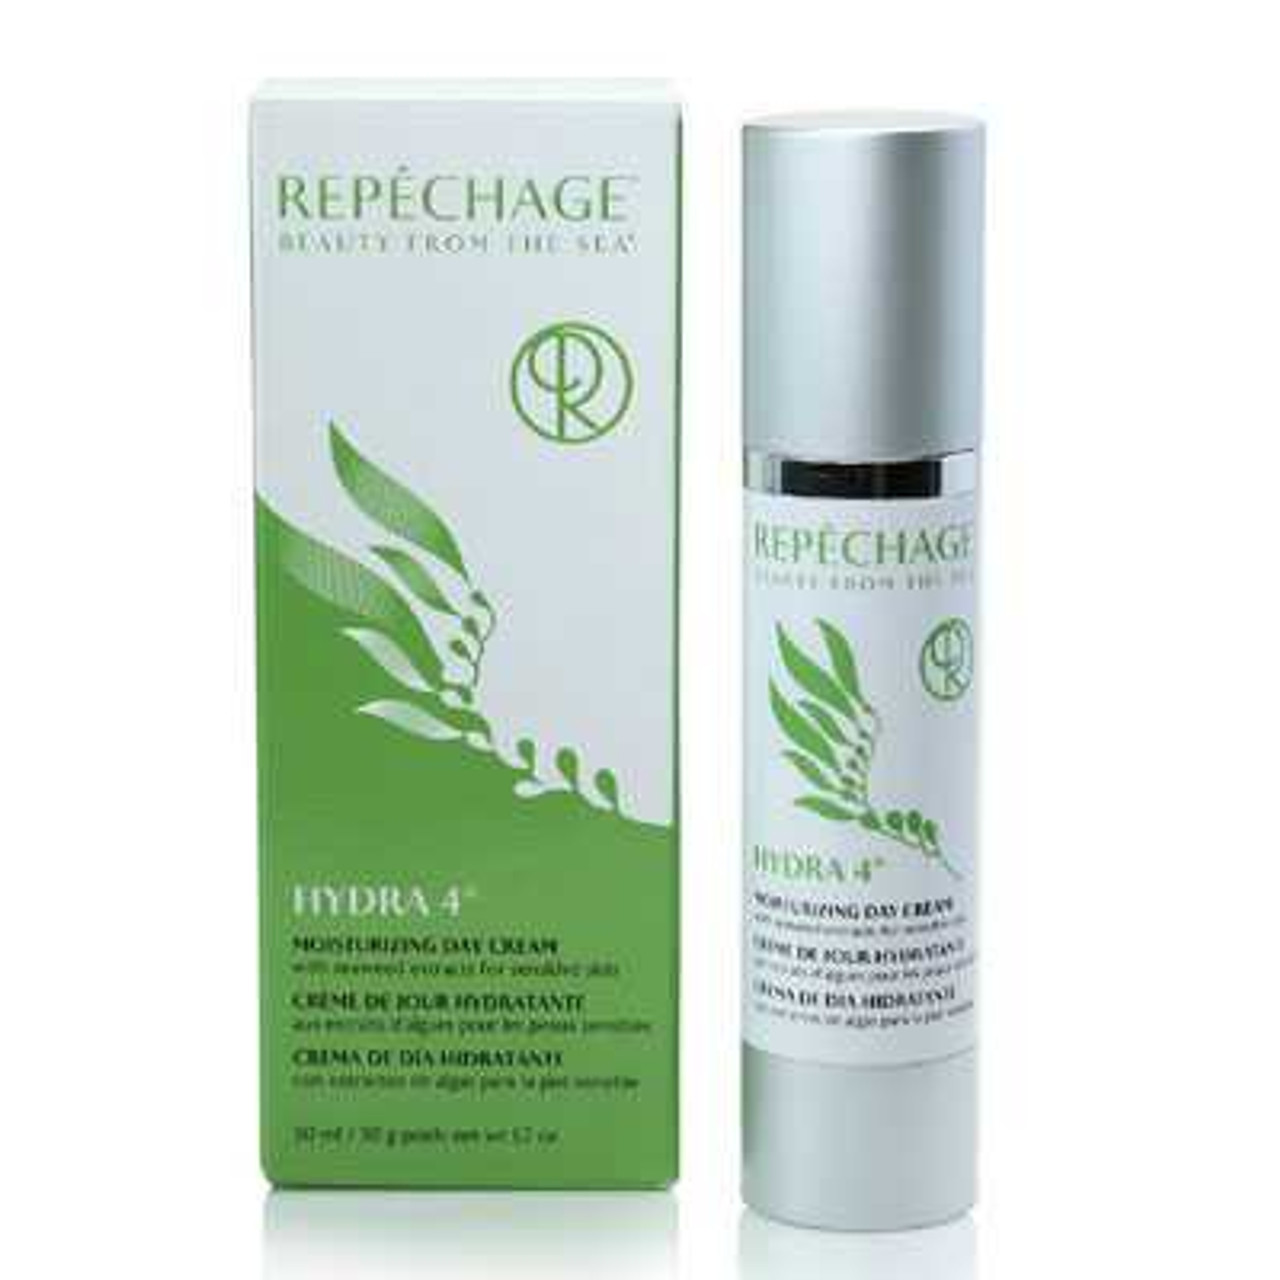 Repechage Hydra 4 Moisturizing Day Cream for Sensitive Skin - 1.7 oz (RR49)